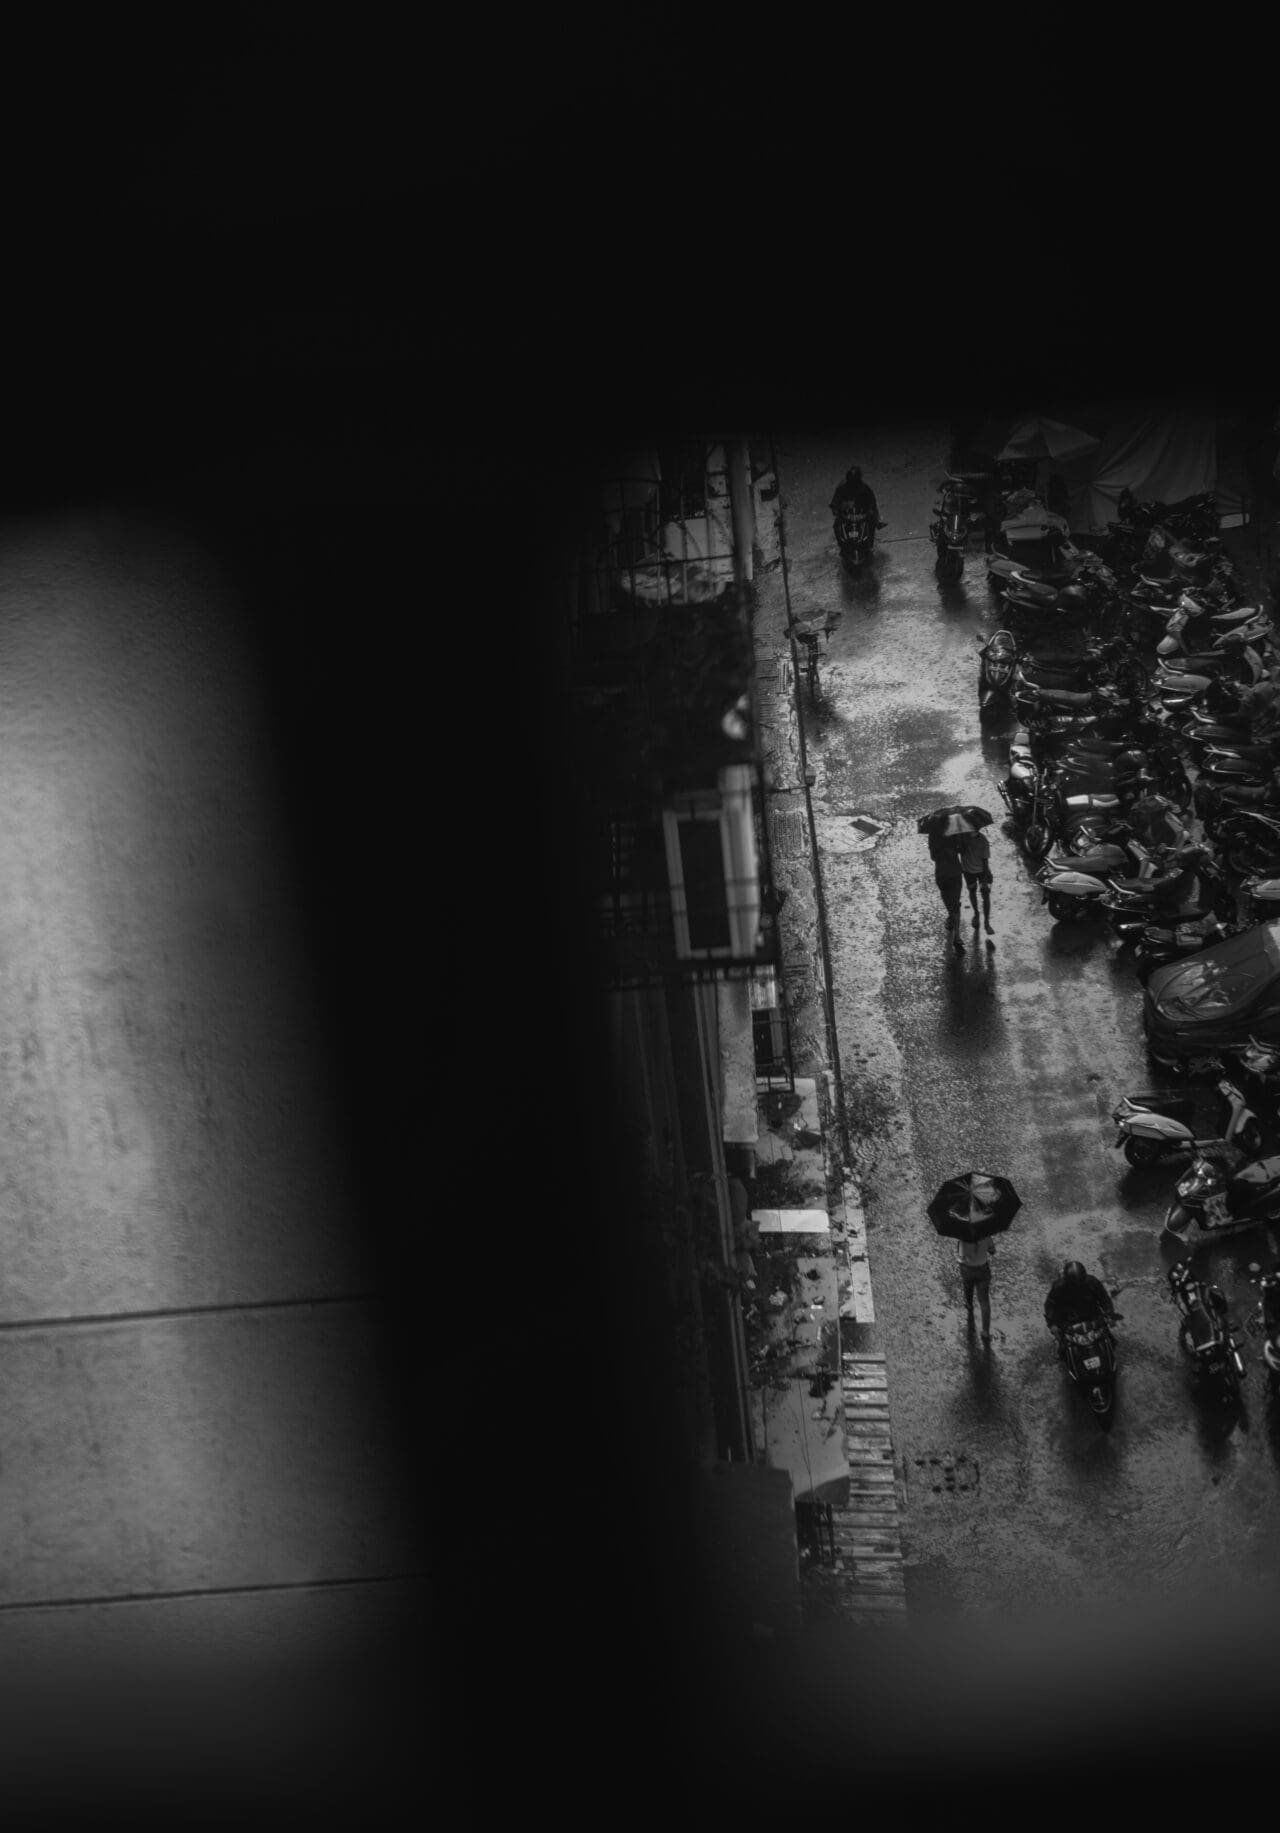 Photographer Sunhil Sippy on Mumbai | Figures walk along an empty street, holding umbrellas